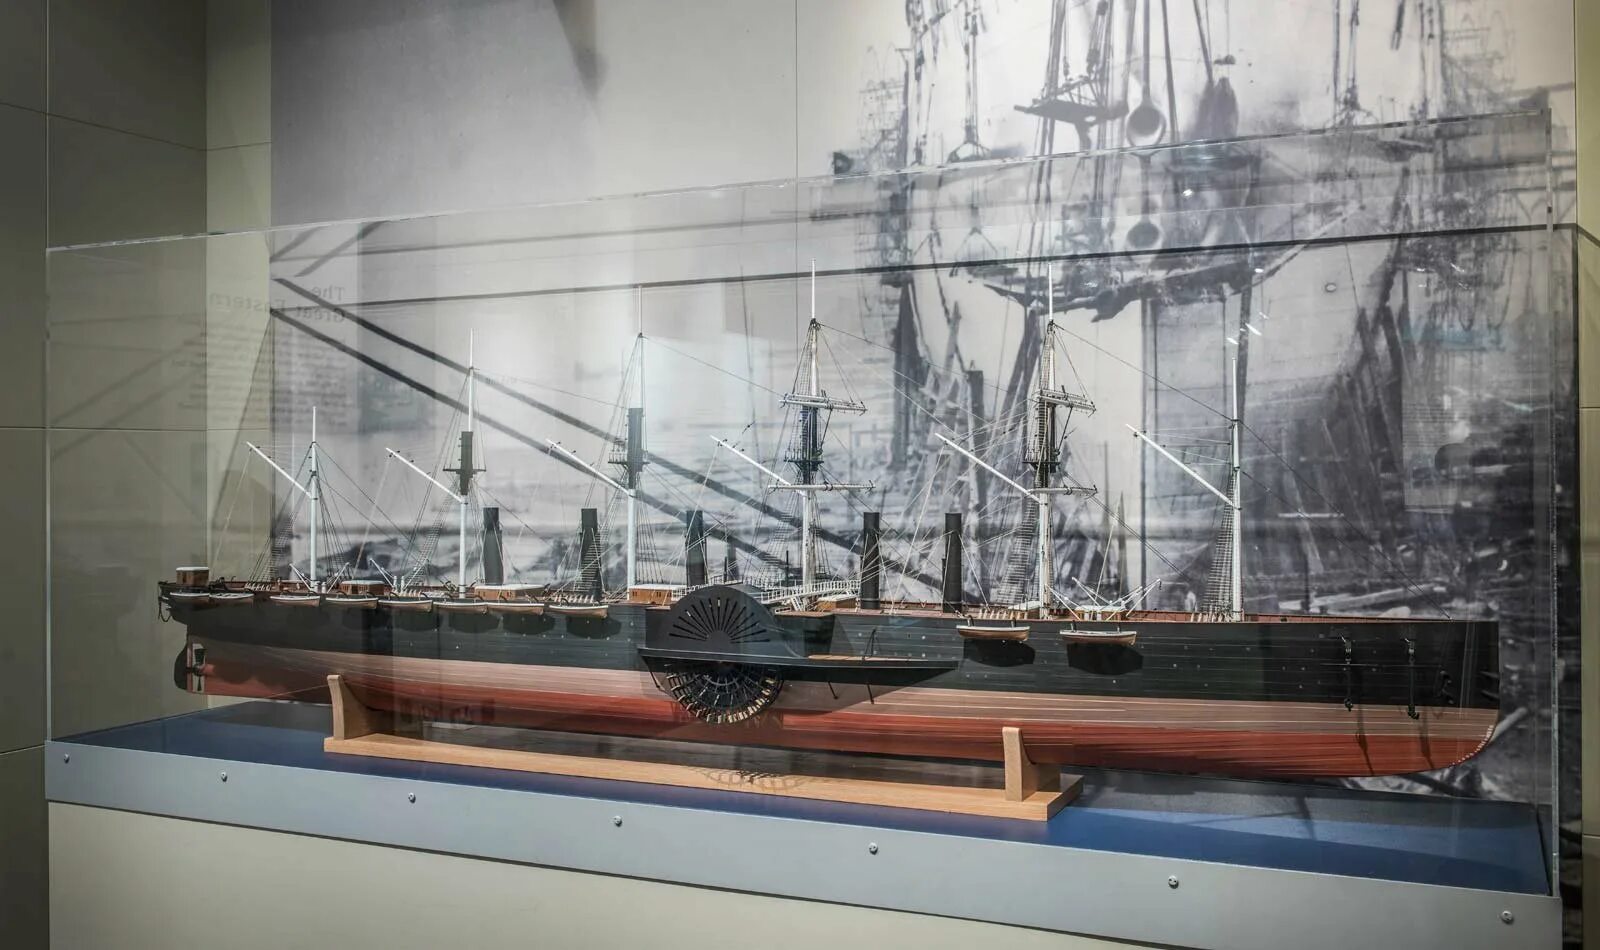 Грейт истерн. Судно Левиафан Грейт Истерн. Грейт Истерн пароход. Great Eastern корабль. SS great Eastern, 1860.